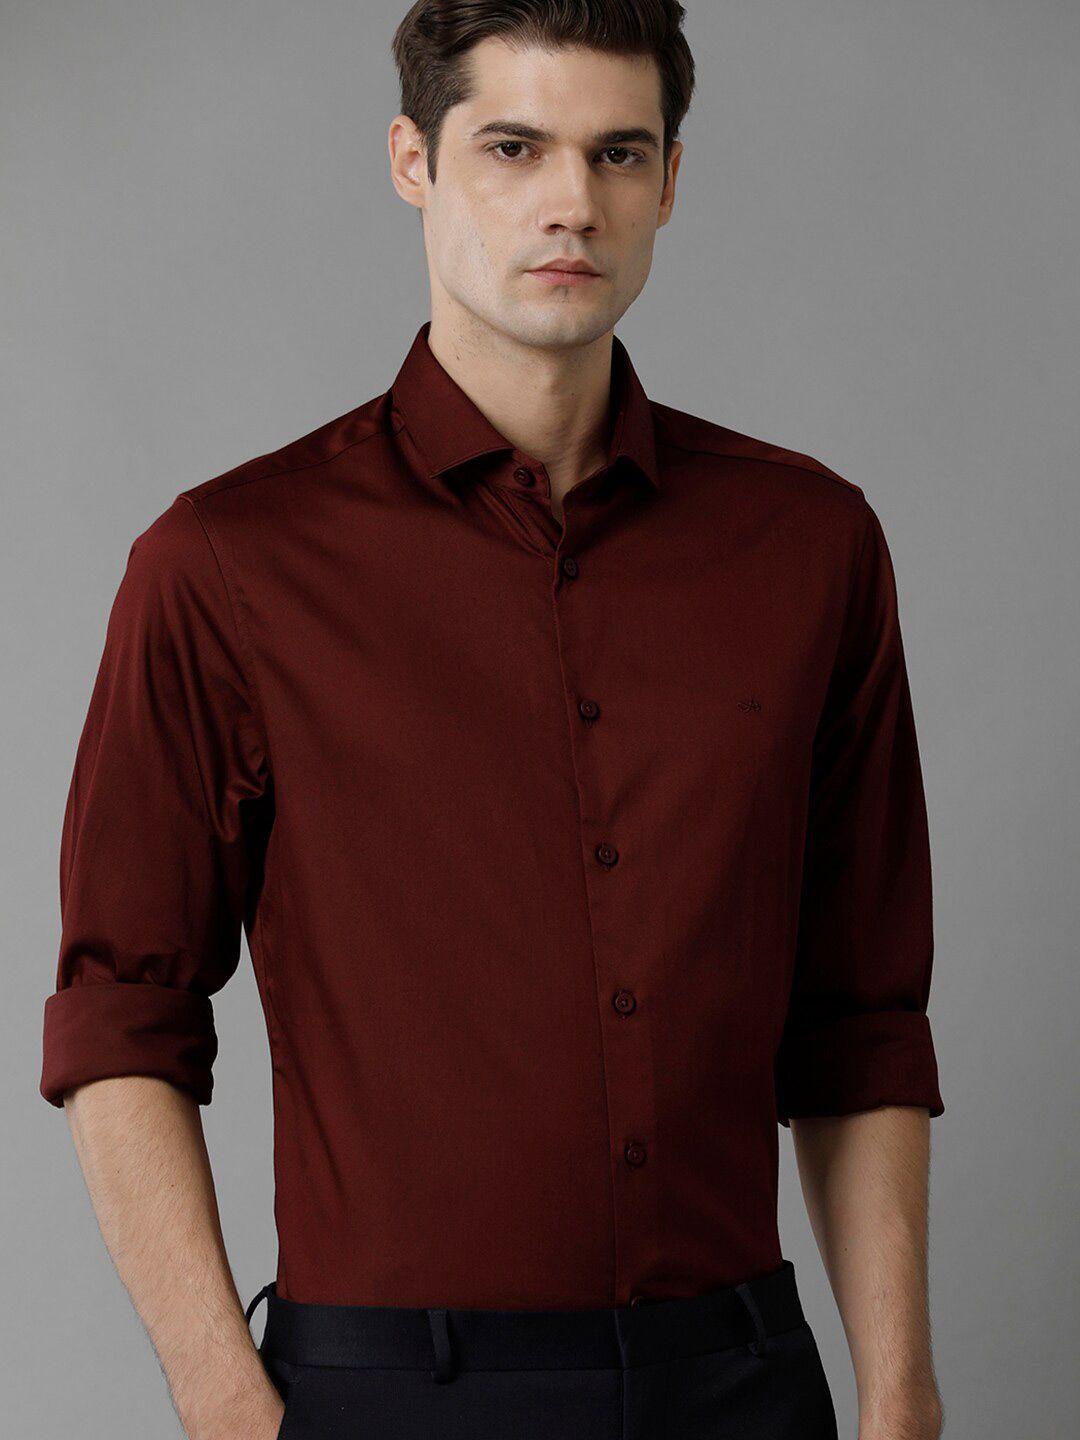 aldeno comfort spread collar long sleeves cotton satin formal shirt